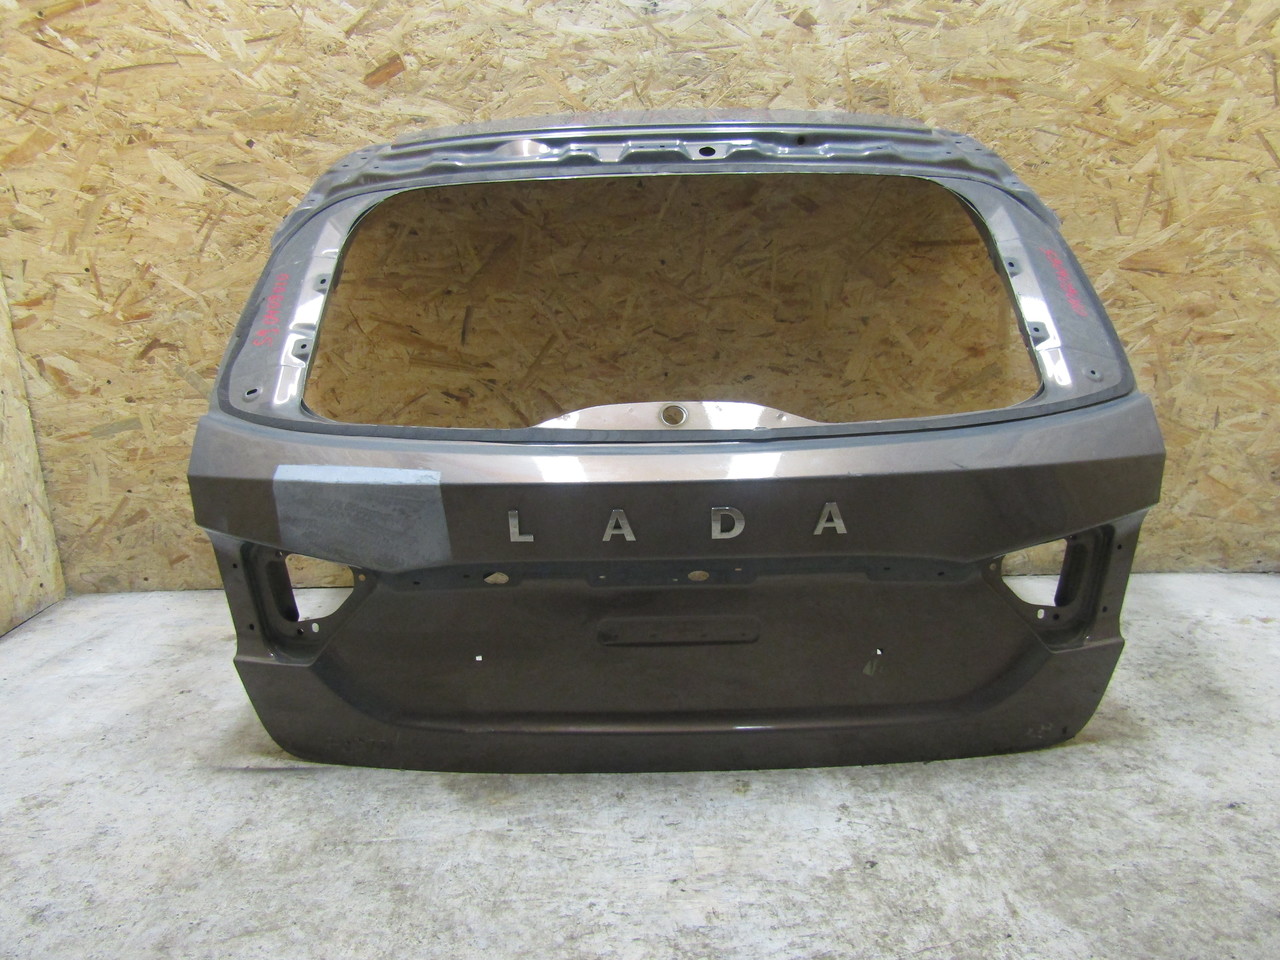 Дверь багажника на Lada Vesta 2015>